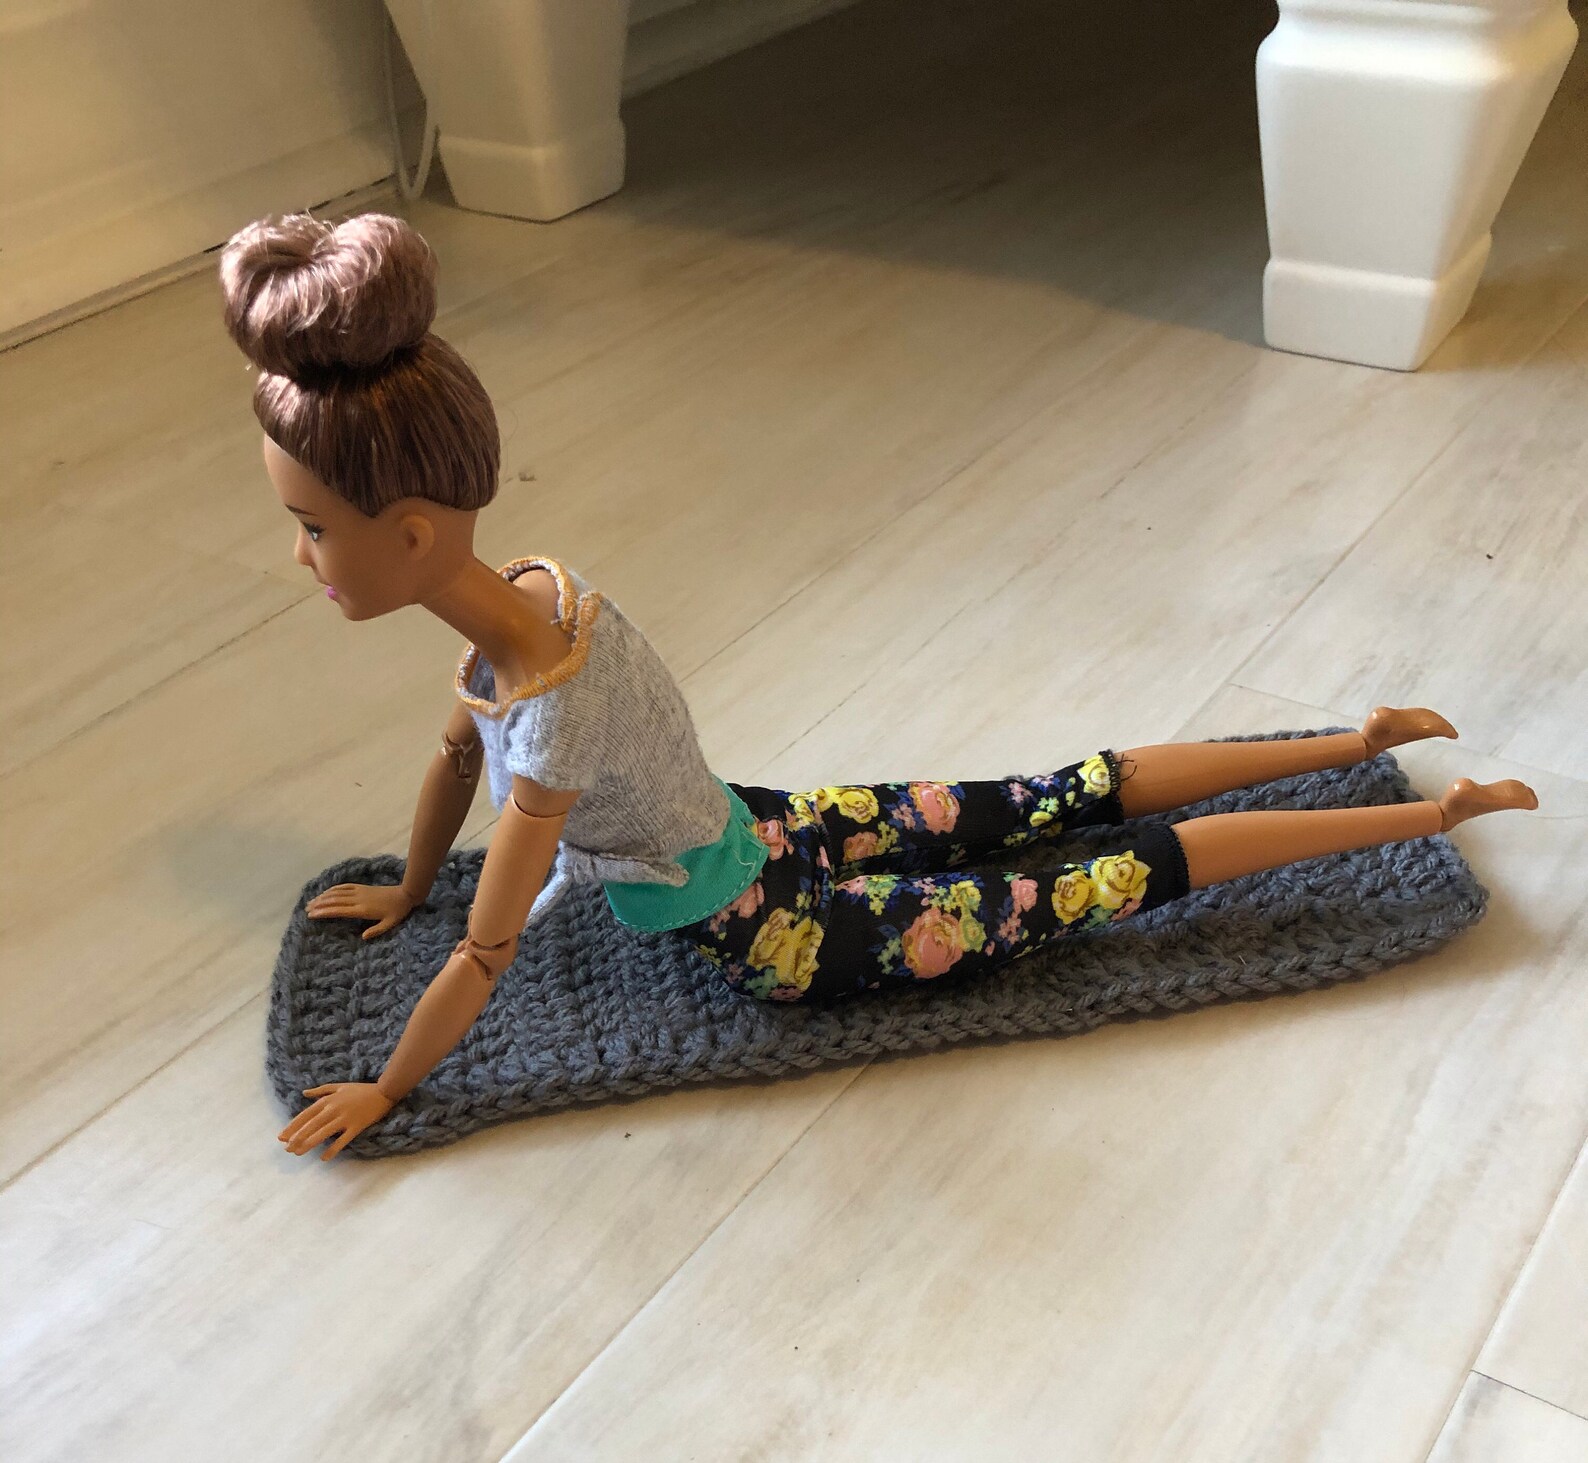 Handmade yoga mat for Barbie crochet amigurumi any color